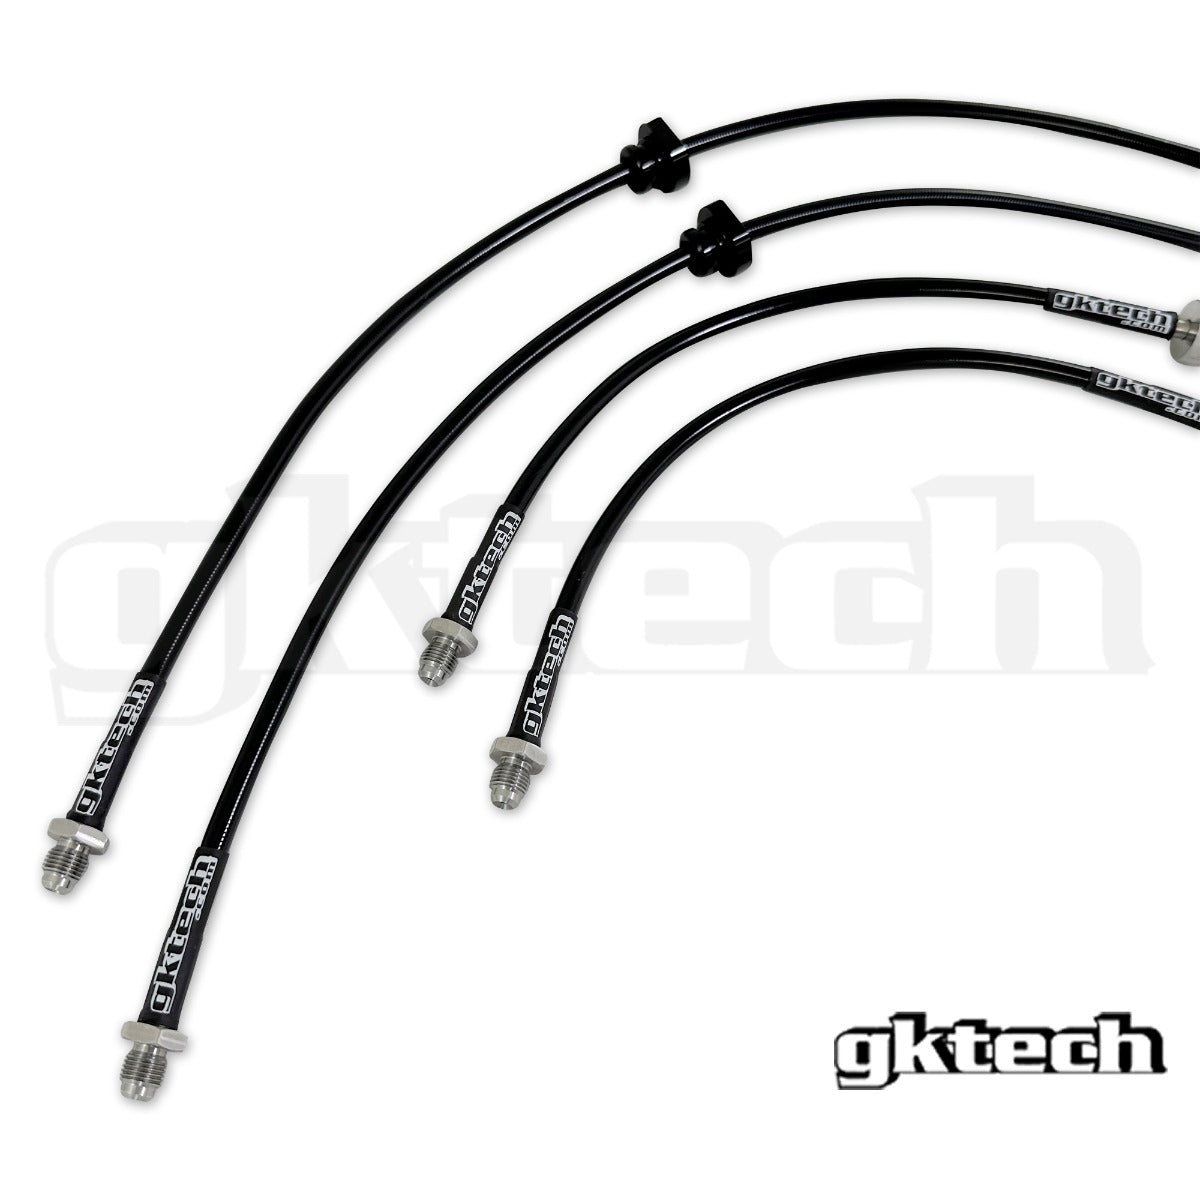 S13 240sx to Z32/GTST/GTR conversion braided brake lines